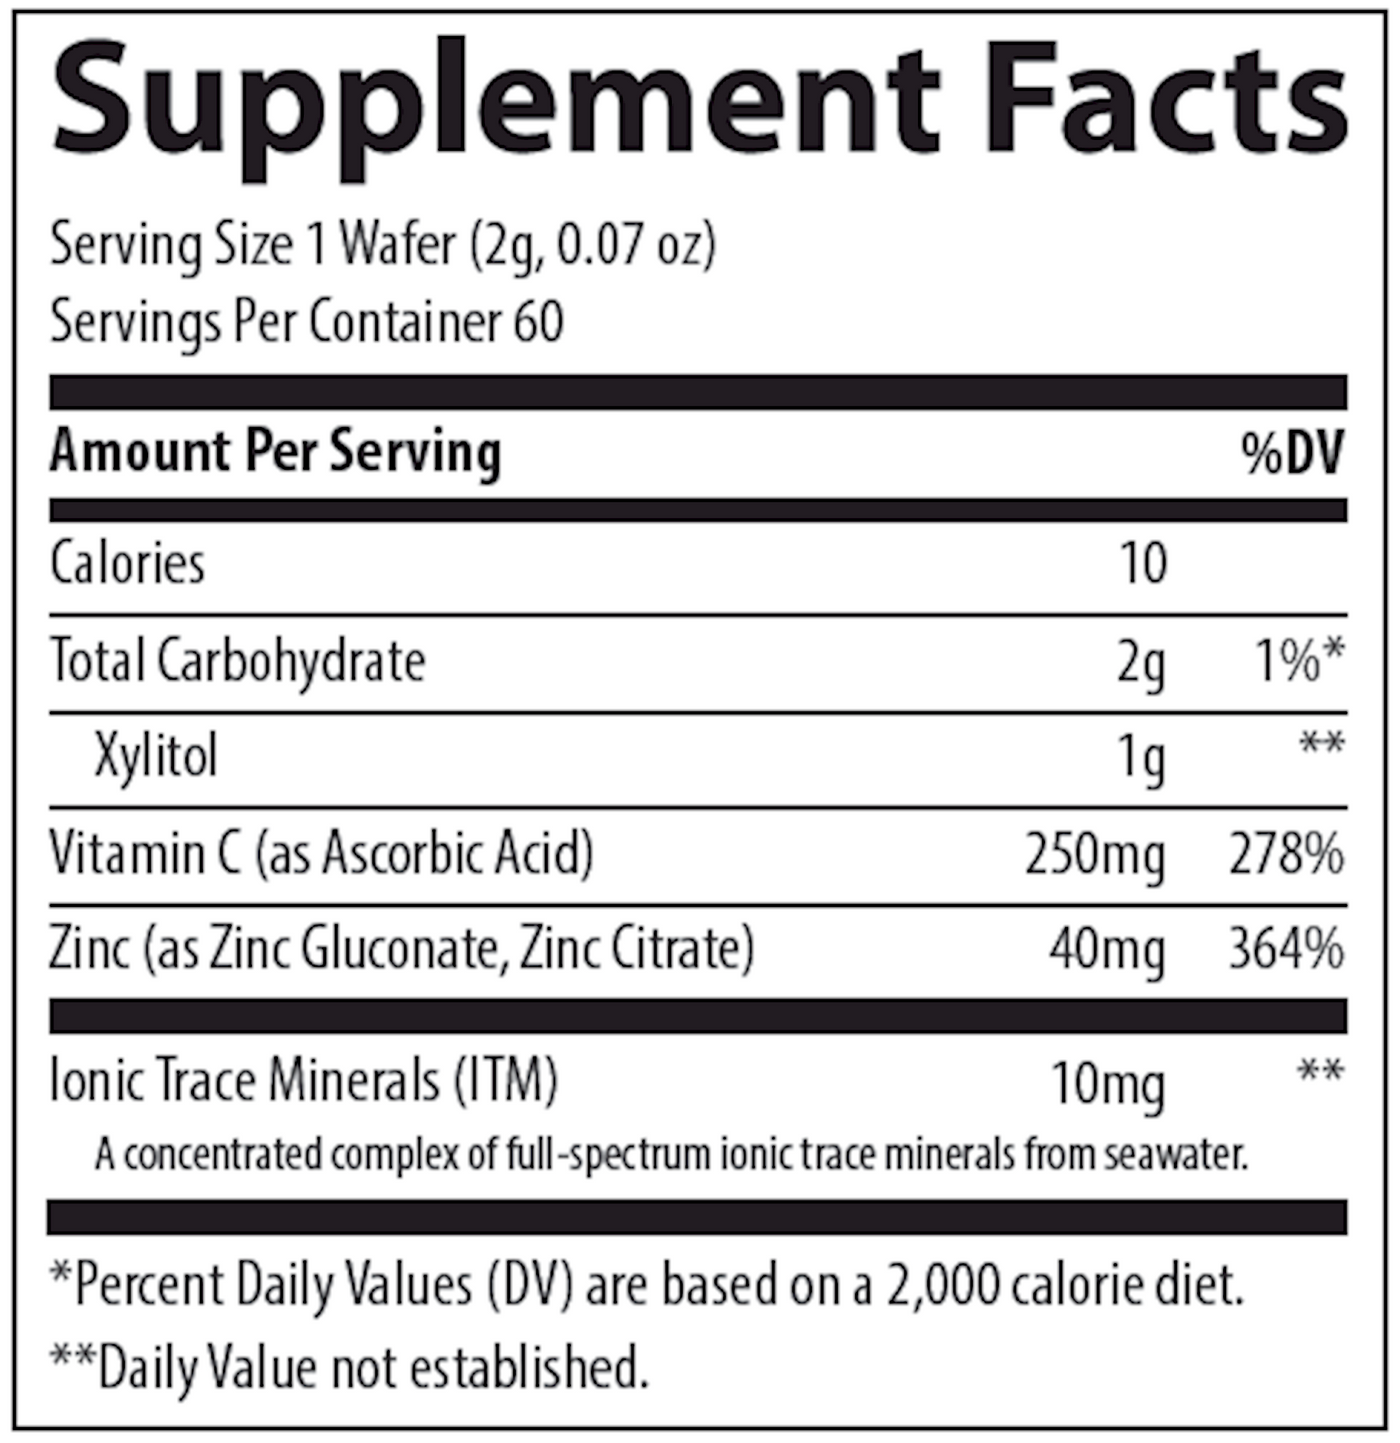 Zinc + Vitamin C Chews 60 wafers Curated Wellness